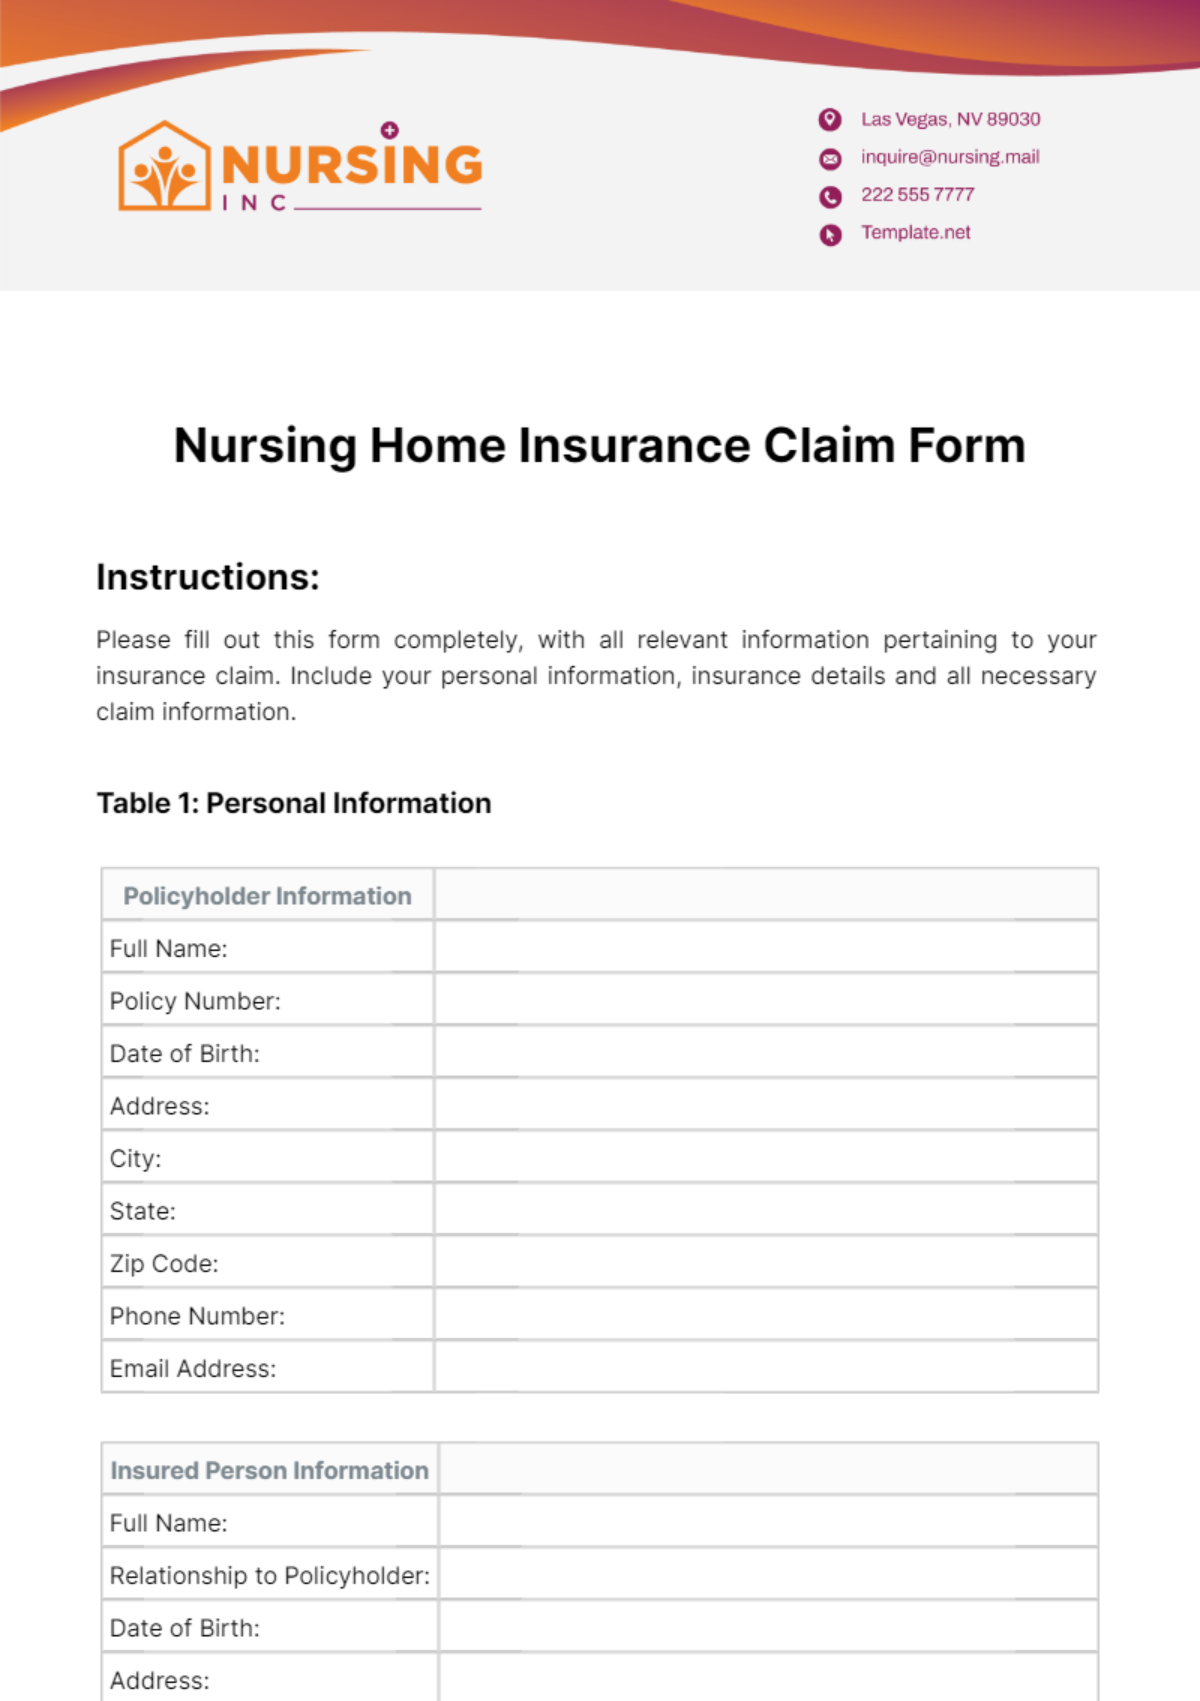 Nursing Home Insurance Claim Form Template